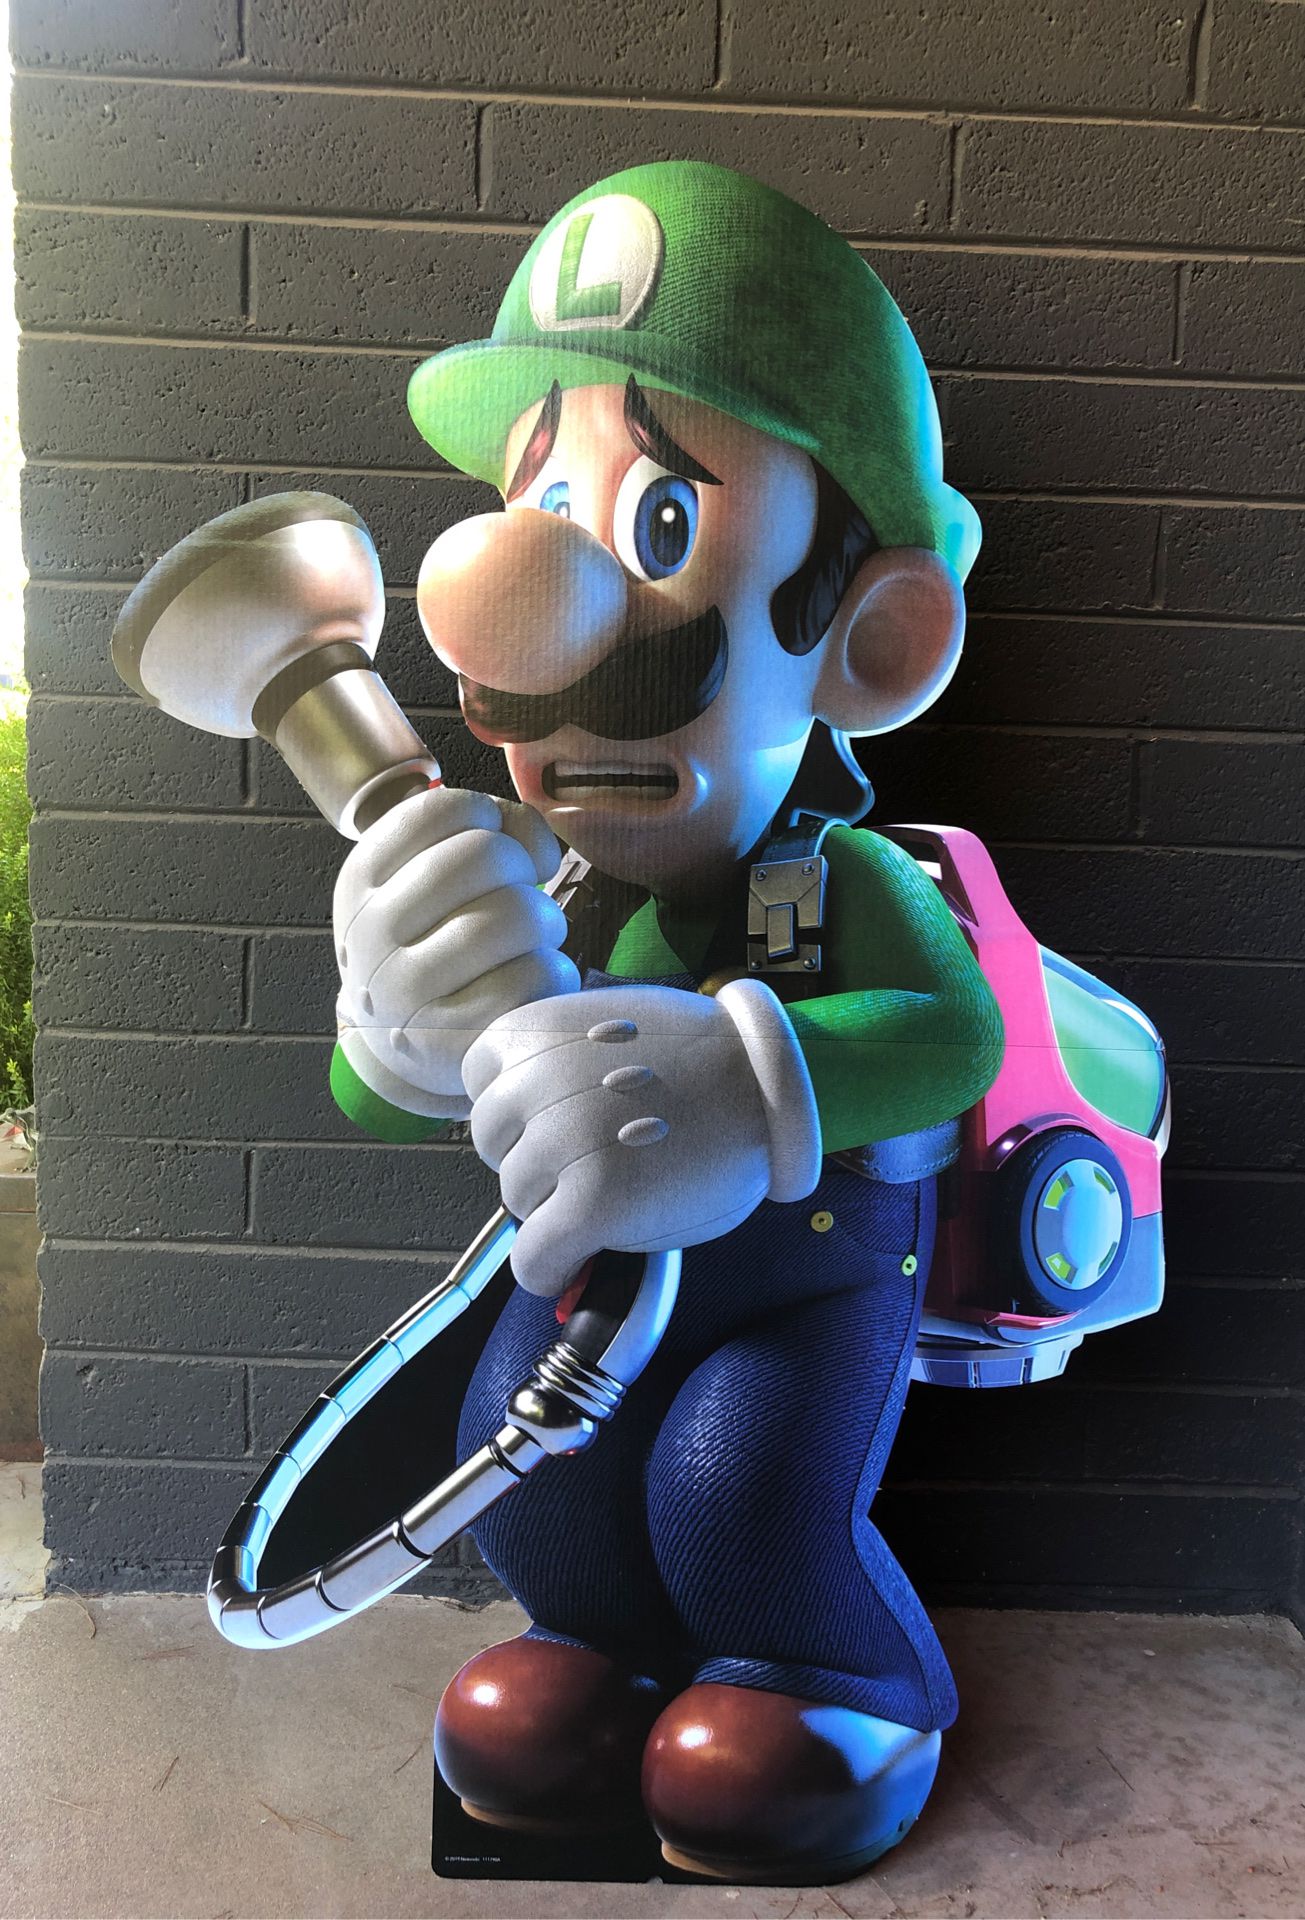 Nintendo Luigi’s Mansion 3 cardboard stand up promo